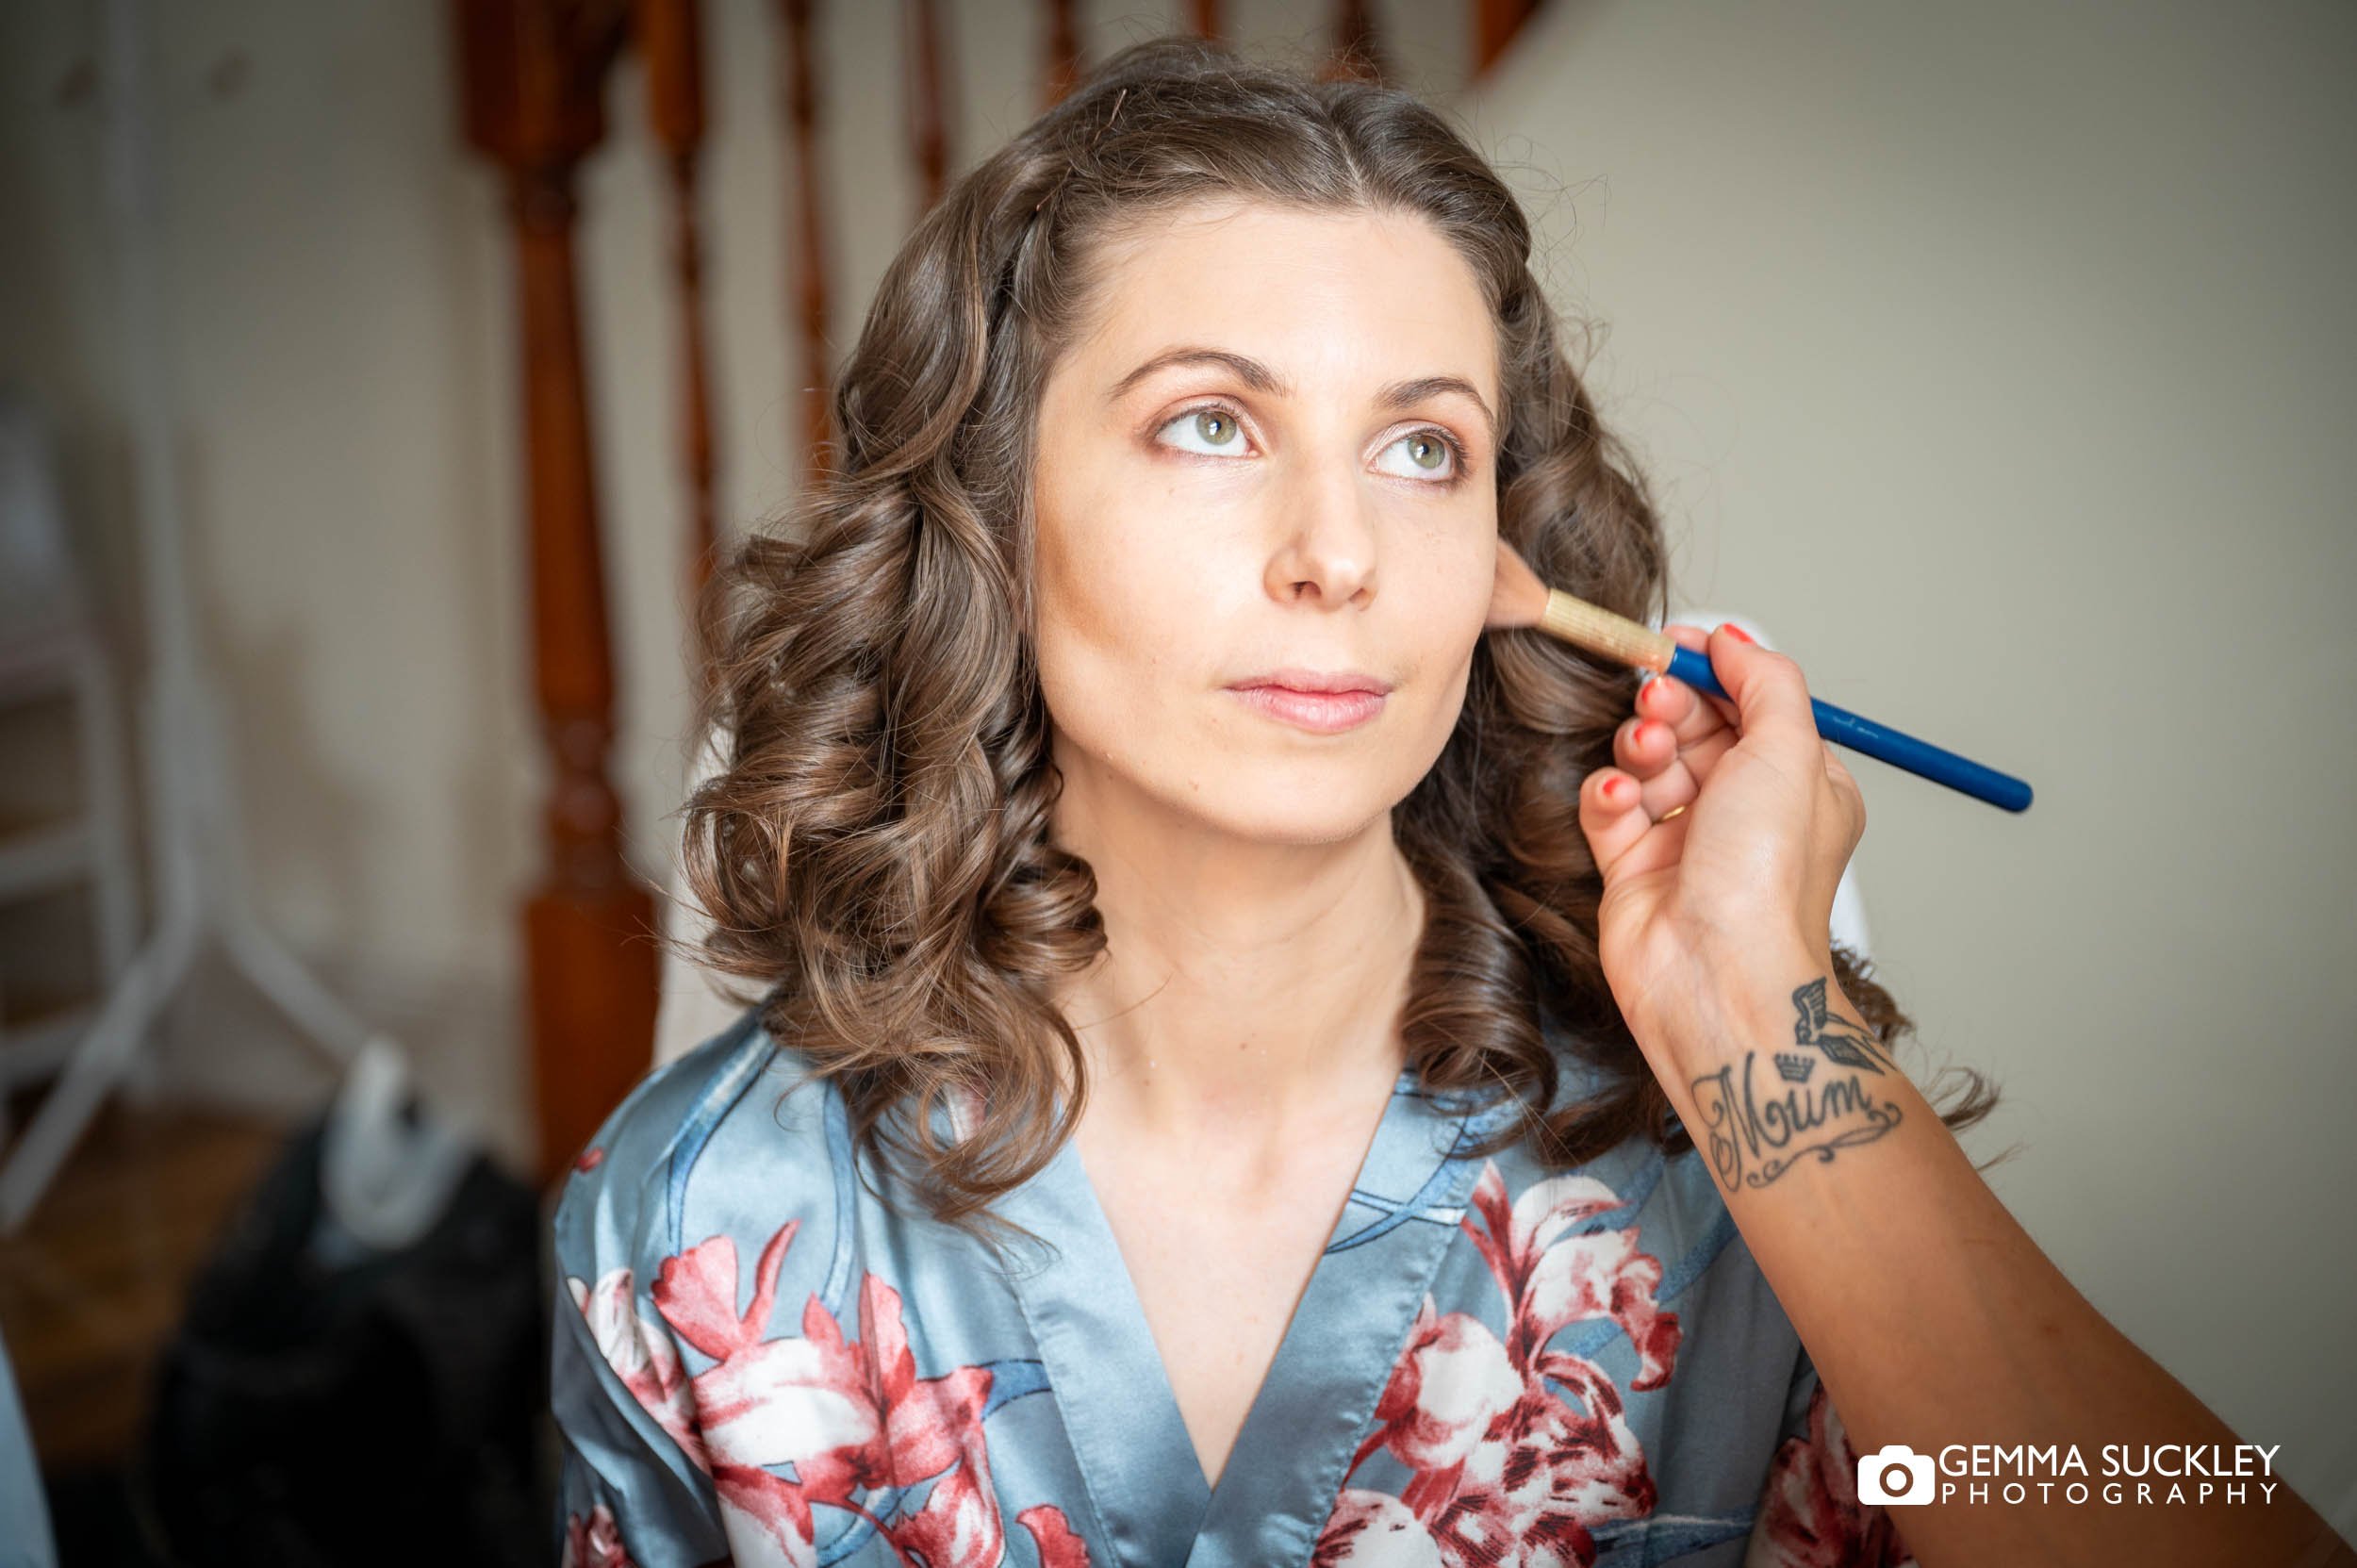 makeup artist applying make up to a bride